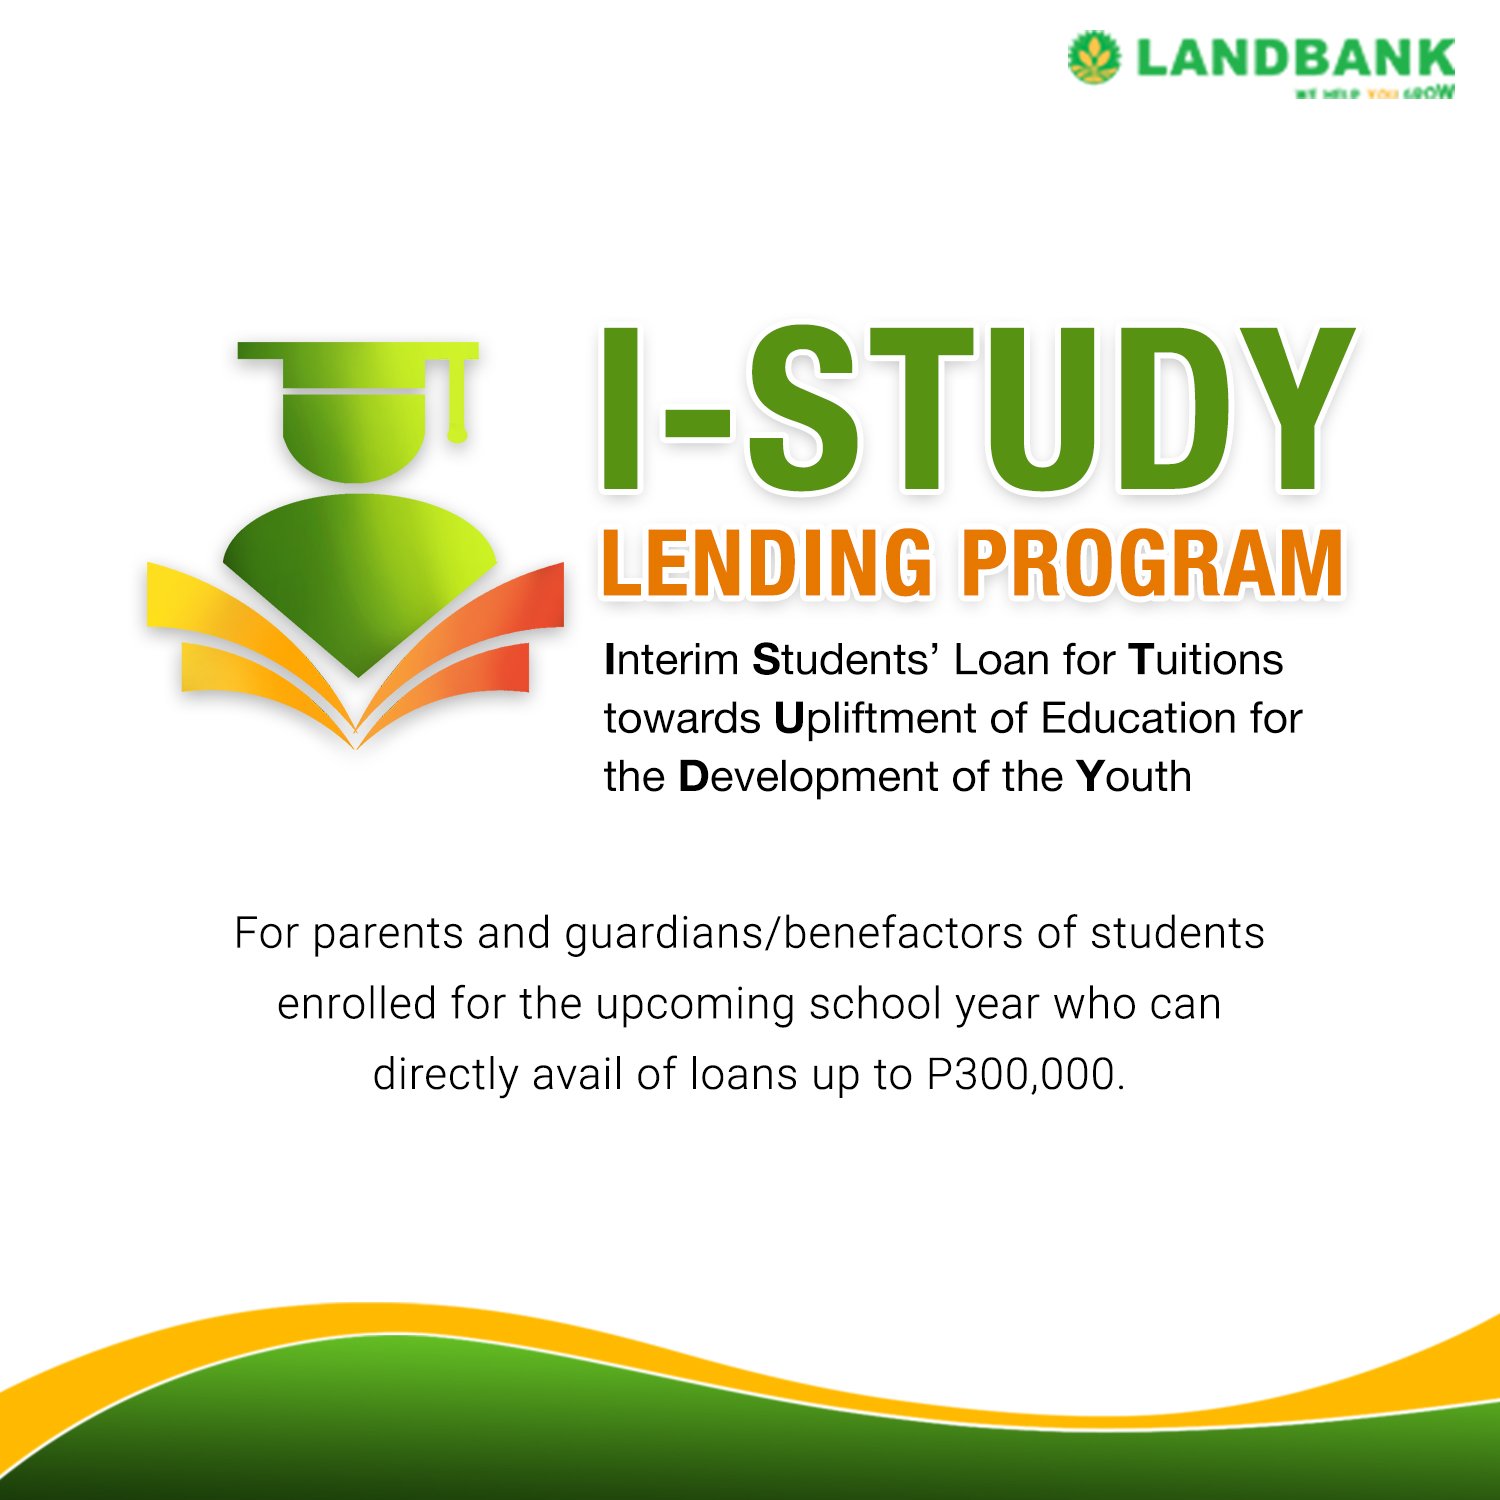 student loans philippines - landbank i-study